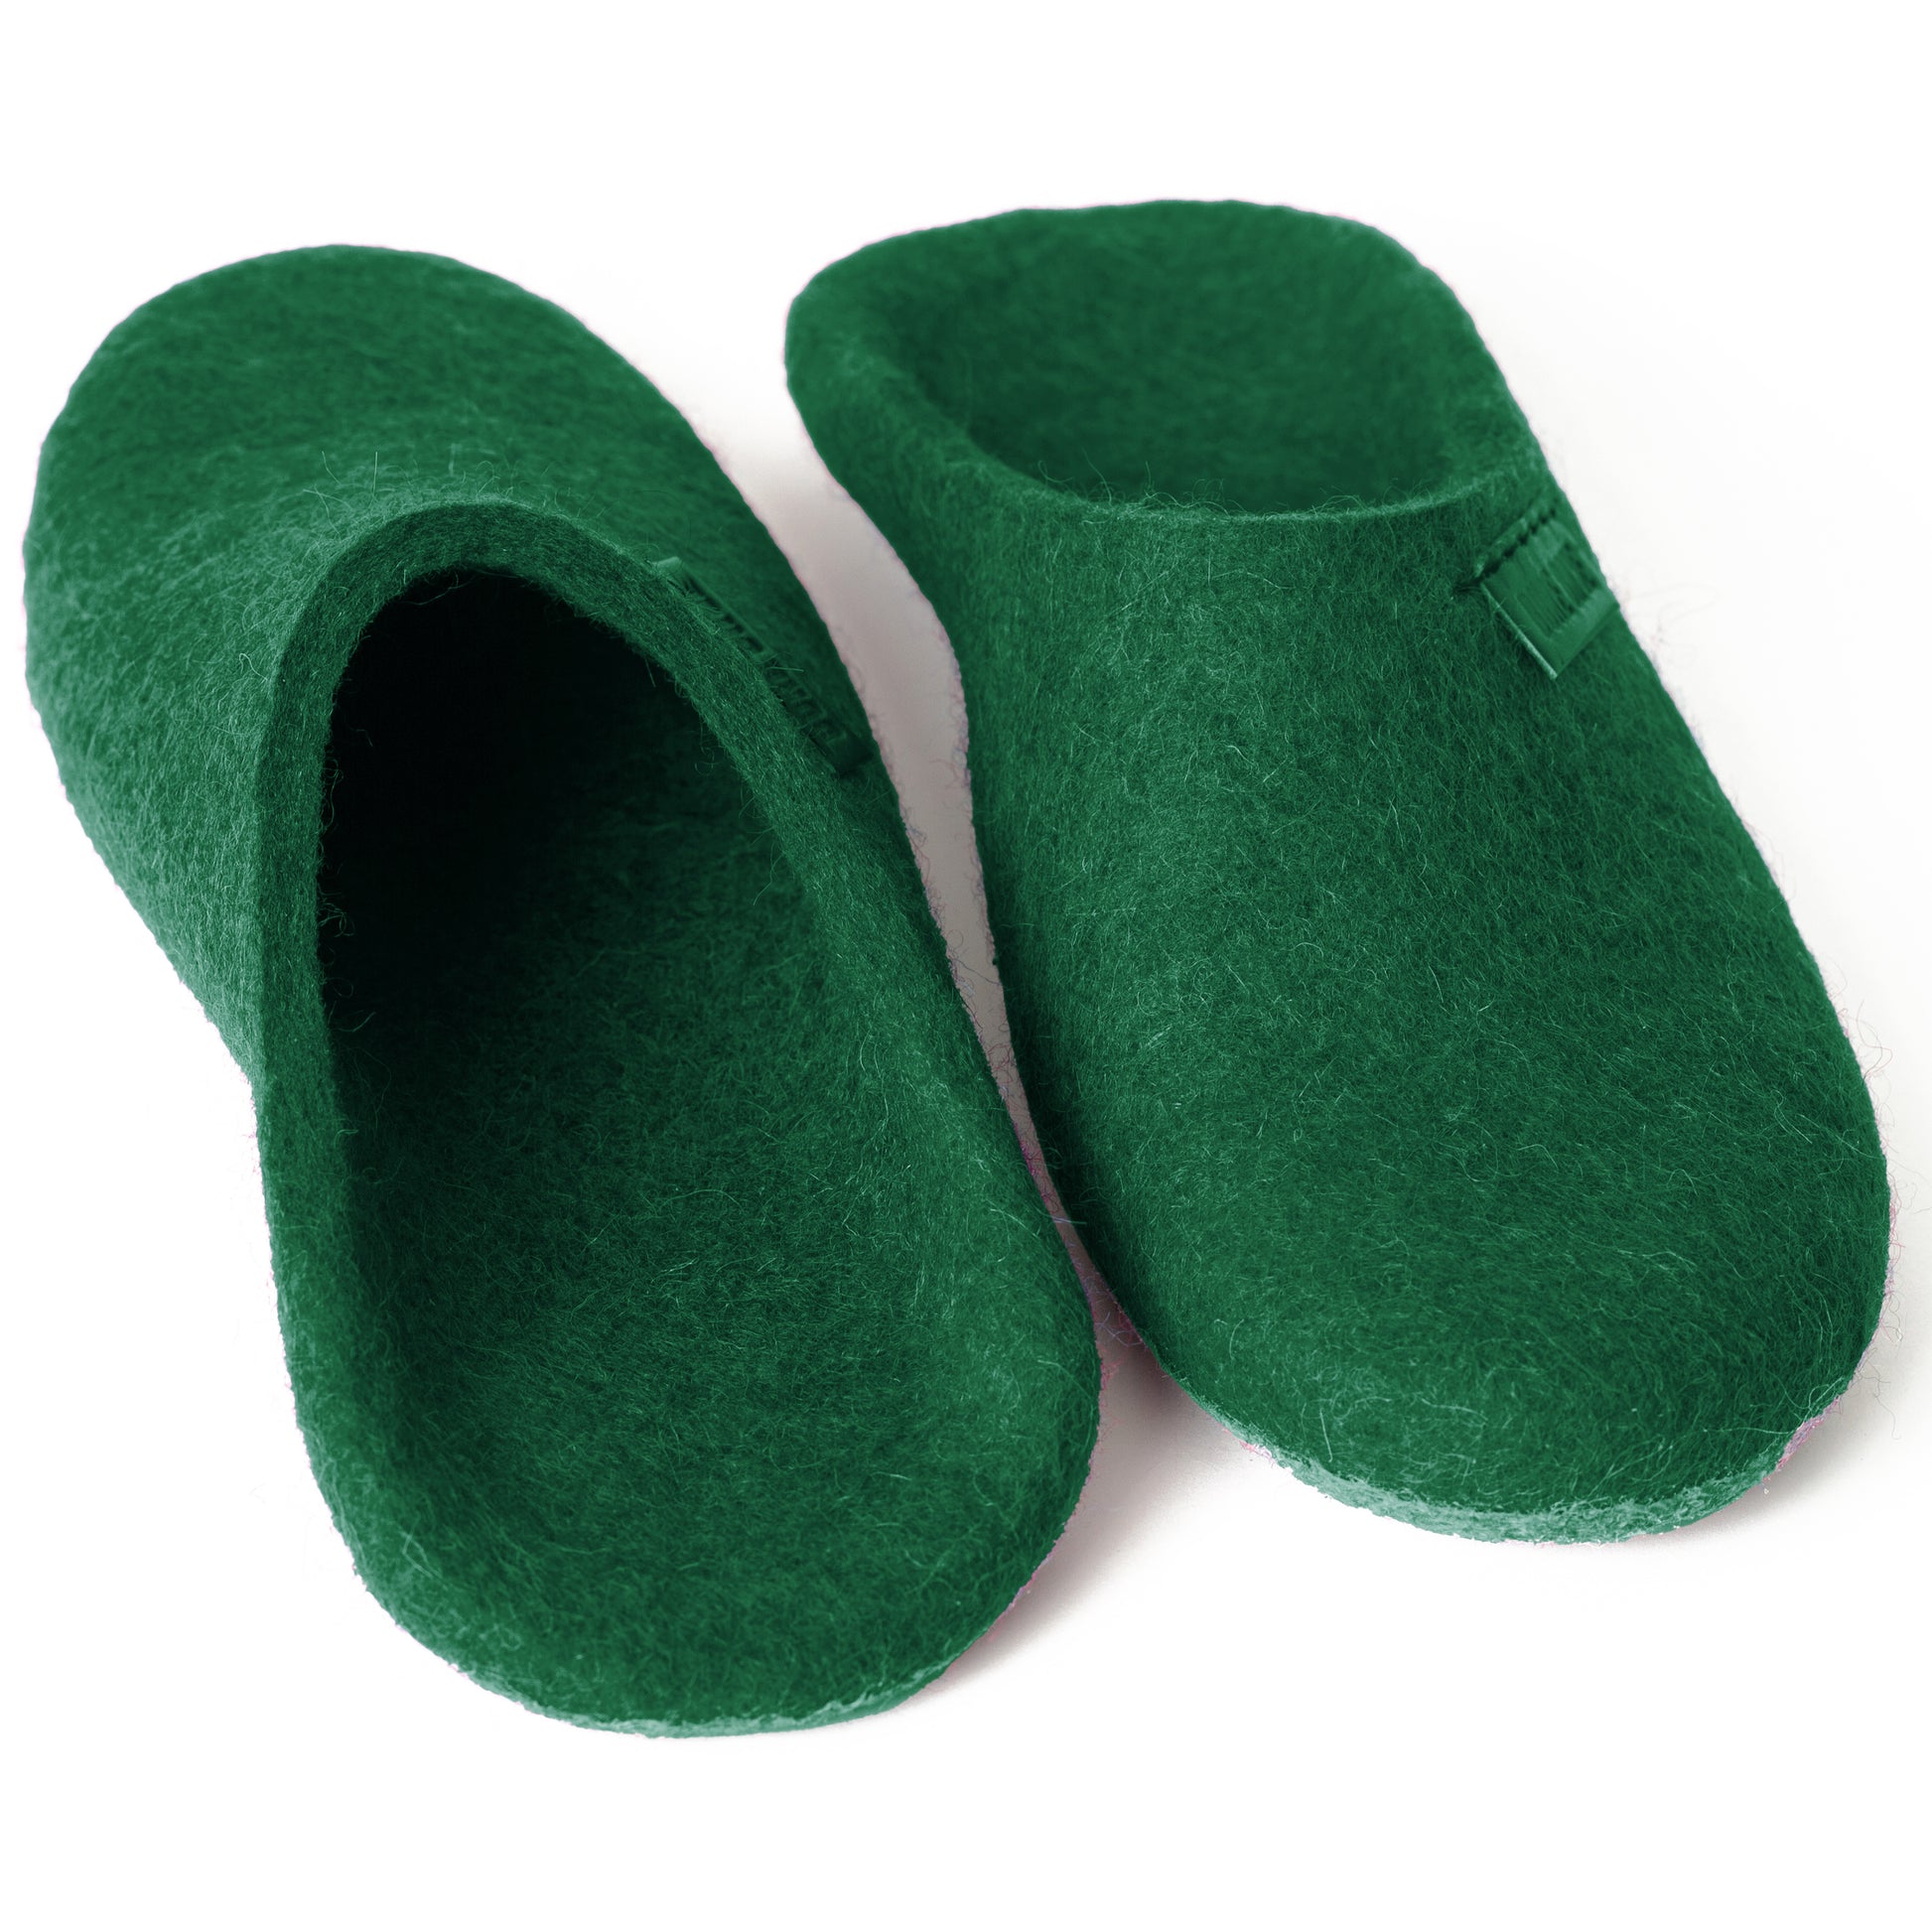 [felted_slippers],[wool_slippers], [burebure_slippers], [warm_wool_slippers], Men's Backless Slippers - Blue Lagoon, Bure Bure wool slippers